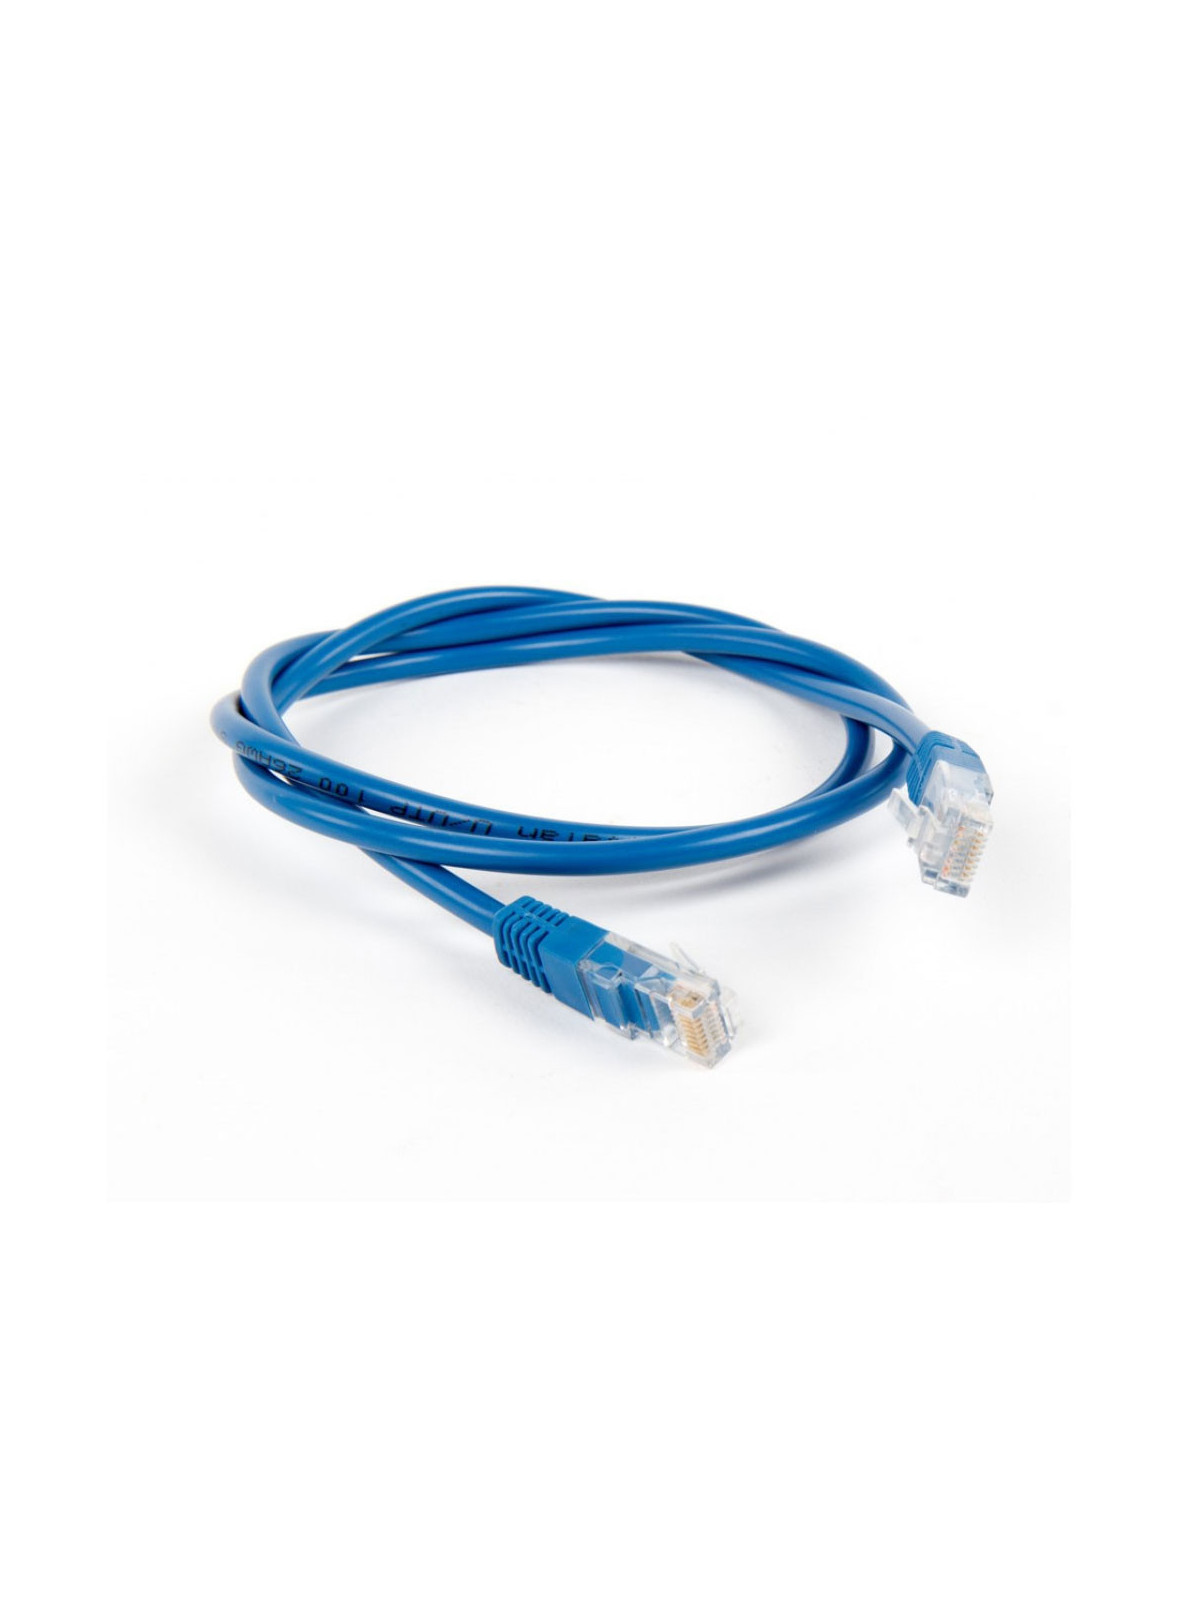 Victron UTP RJ45 kabel - 1,8m